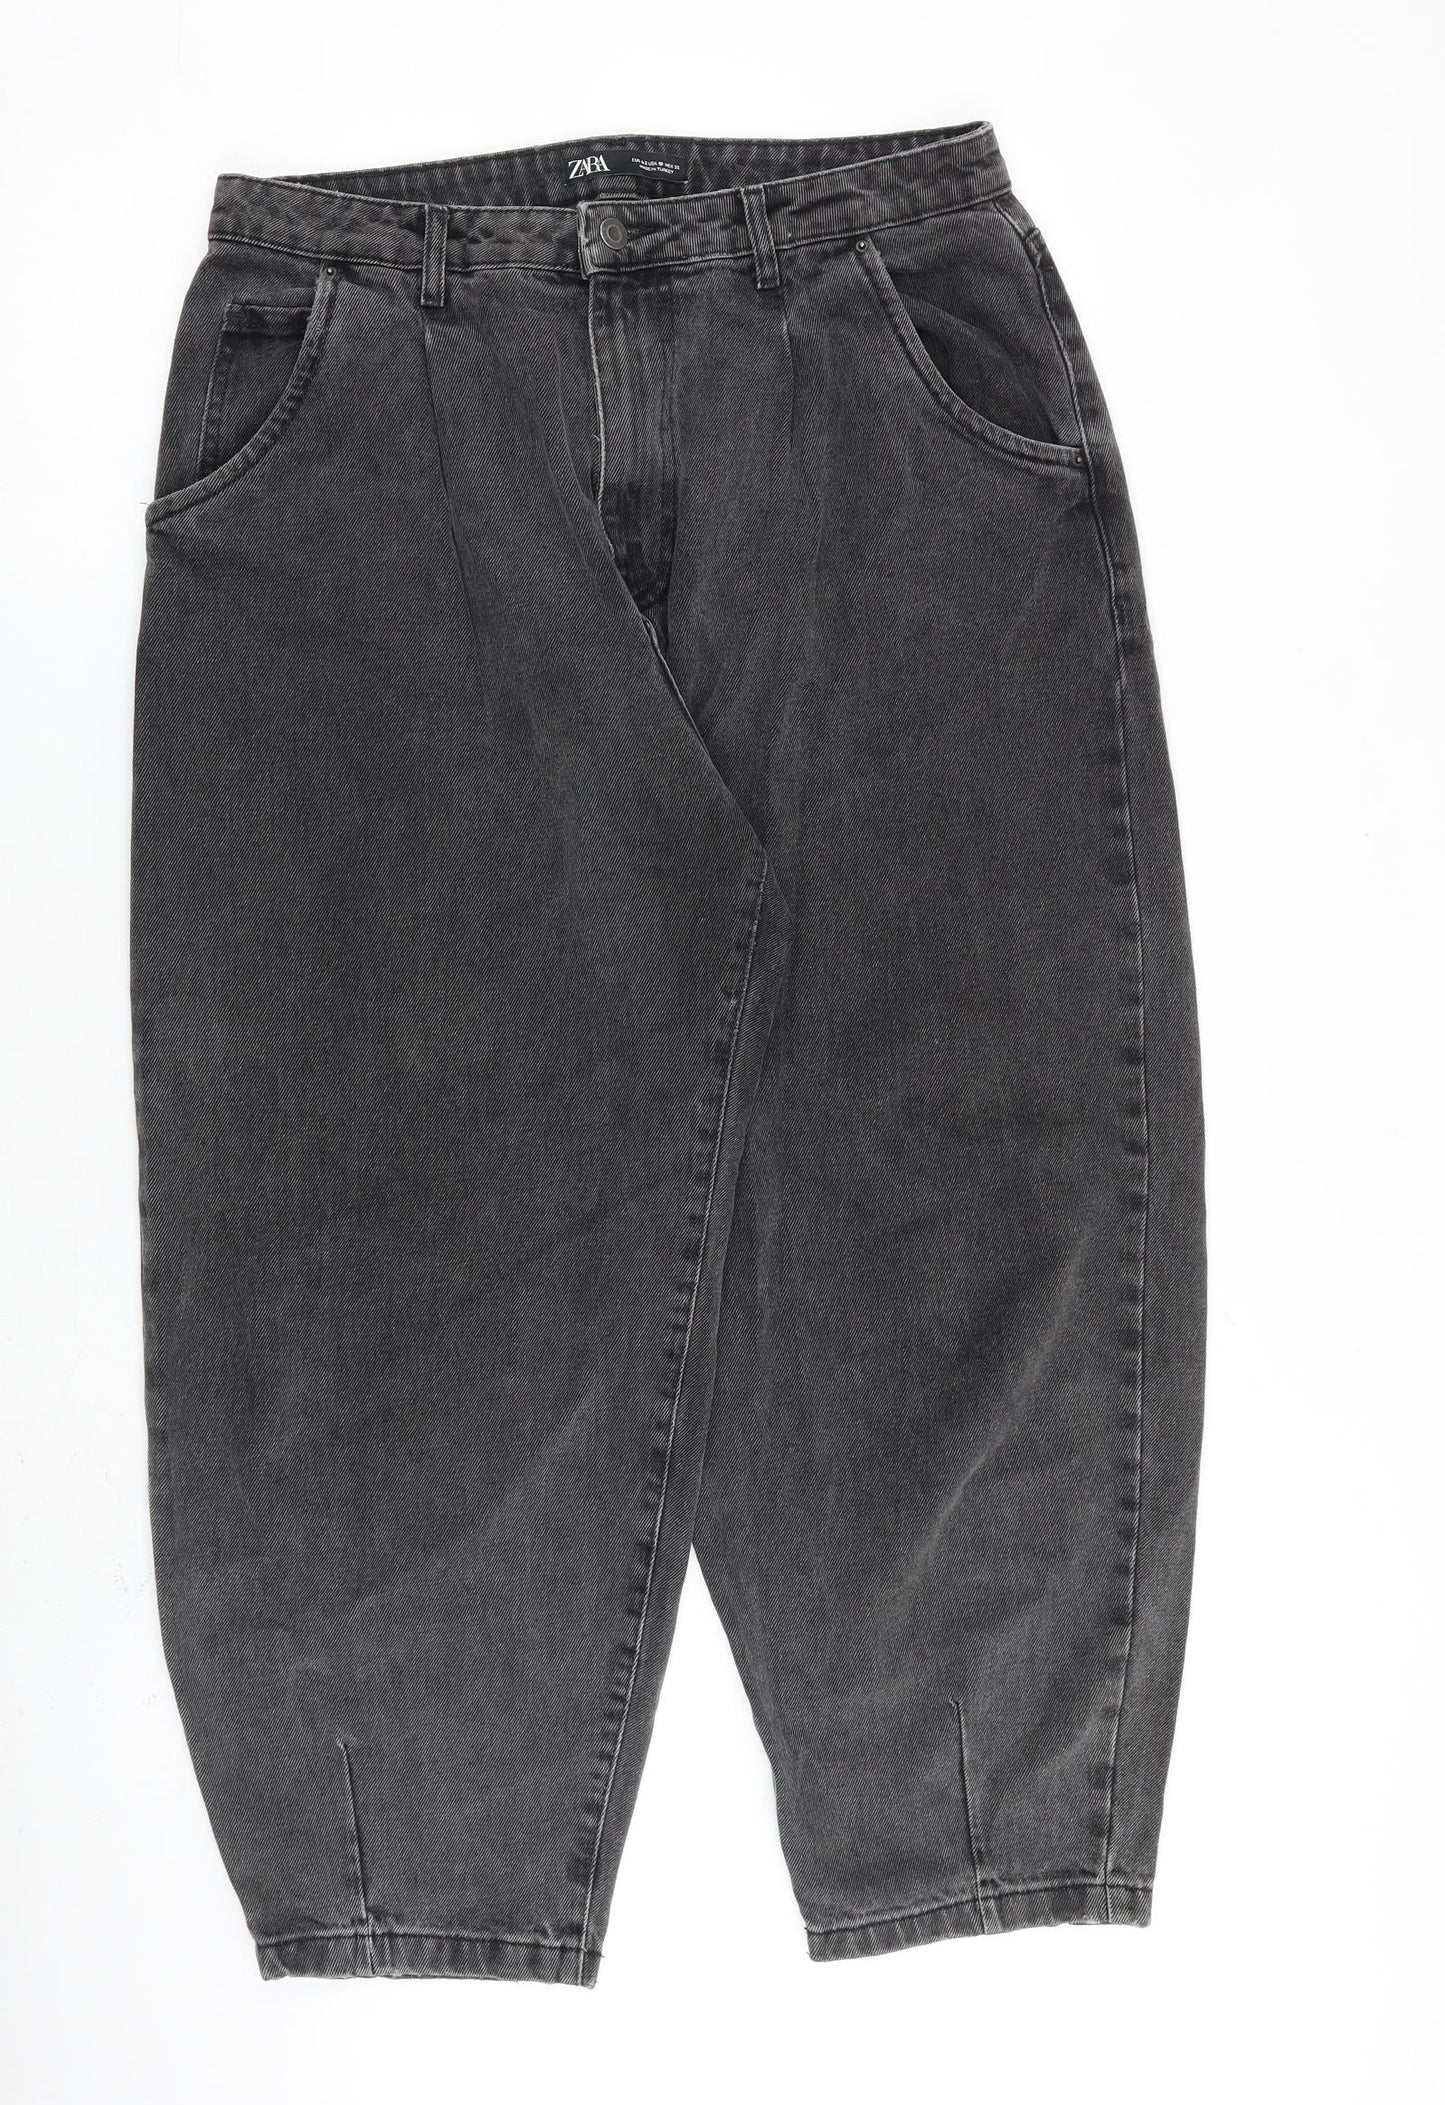 Zara Womens Grey Cotton Tapered Jeans Size 14 L26 in Regular Zip